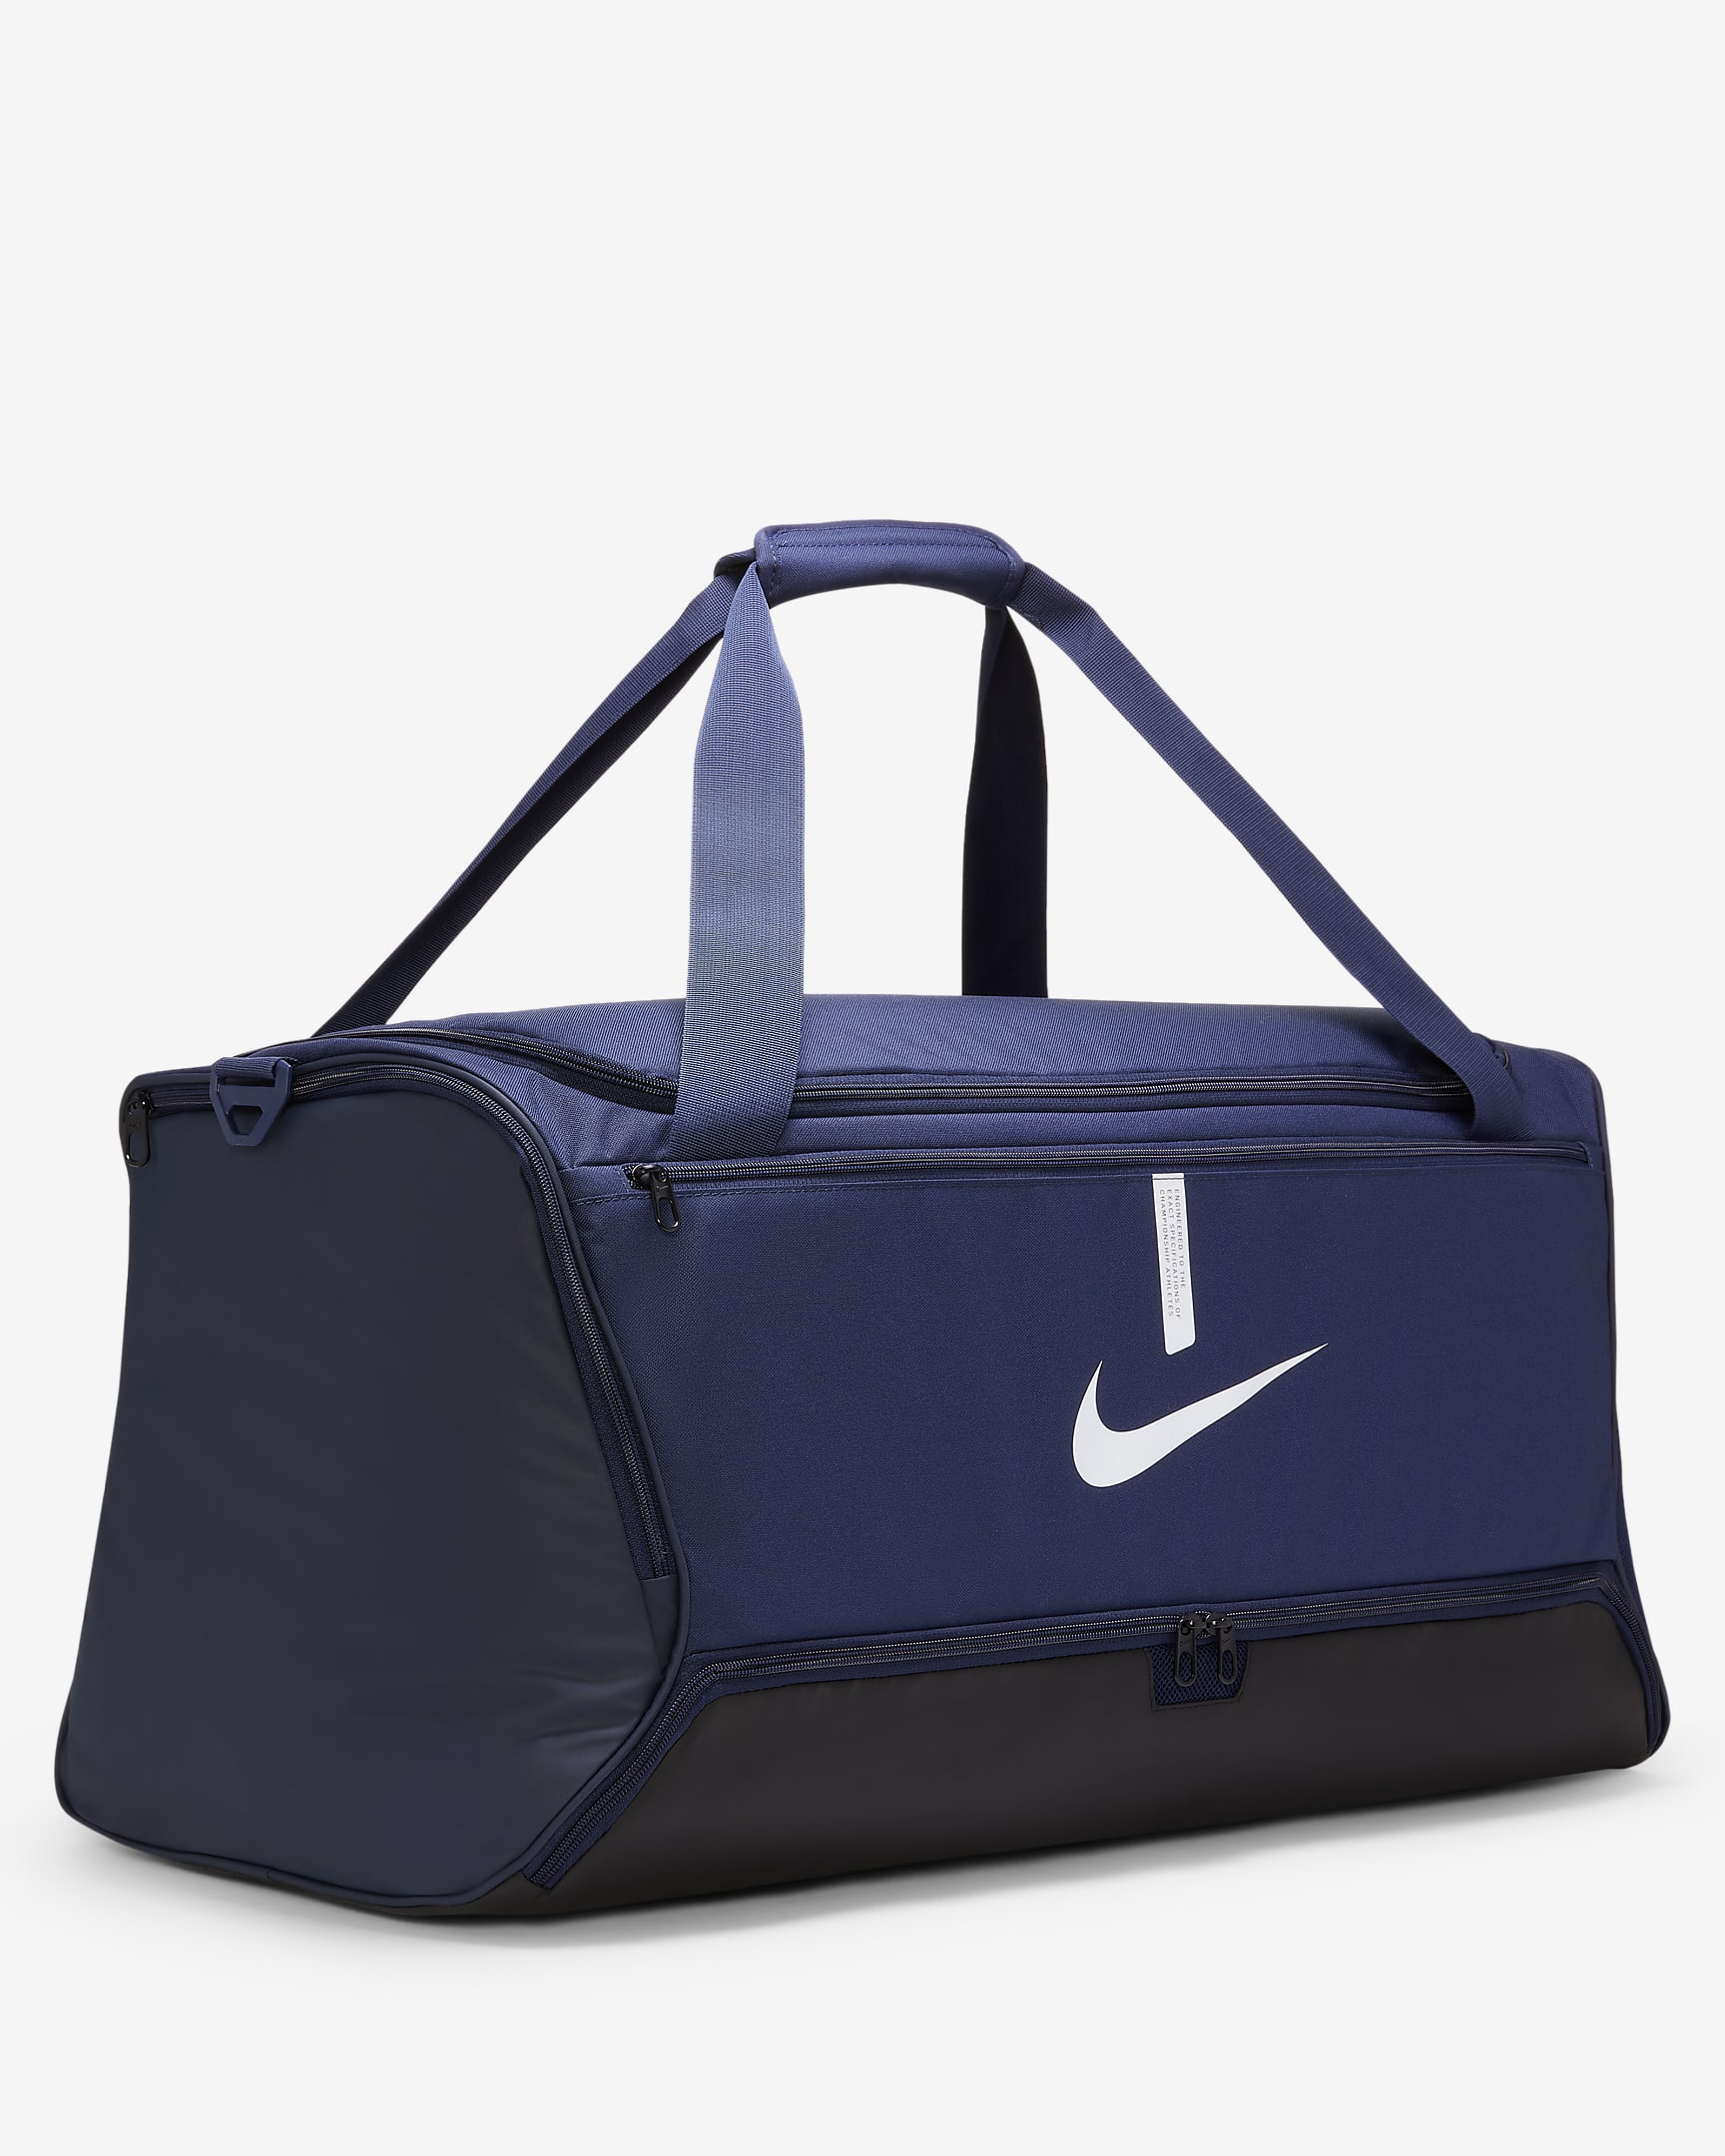 Nike Academy Team Football Duffel Bag (Large, 95L) - Midnight Navy/Black/White